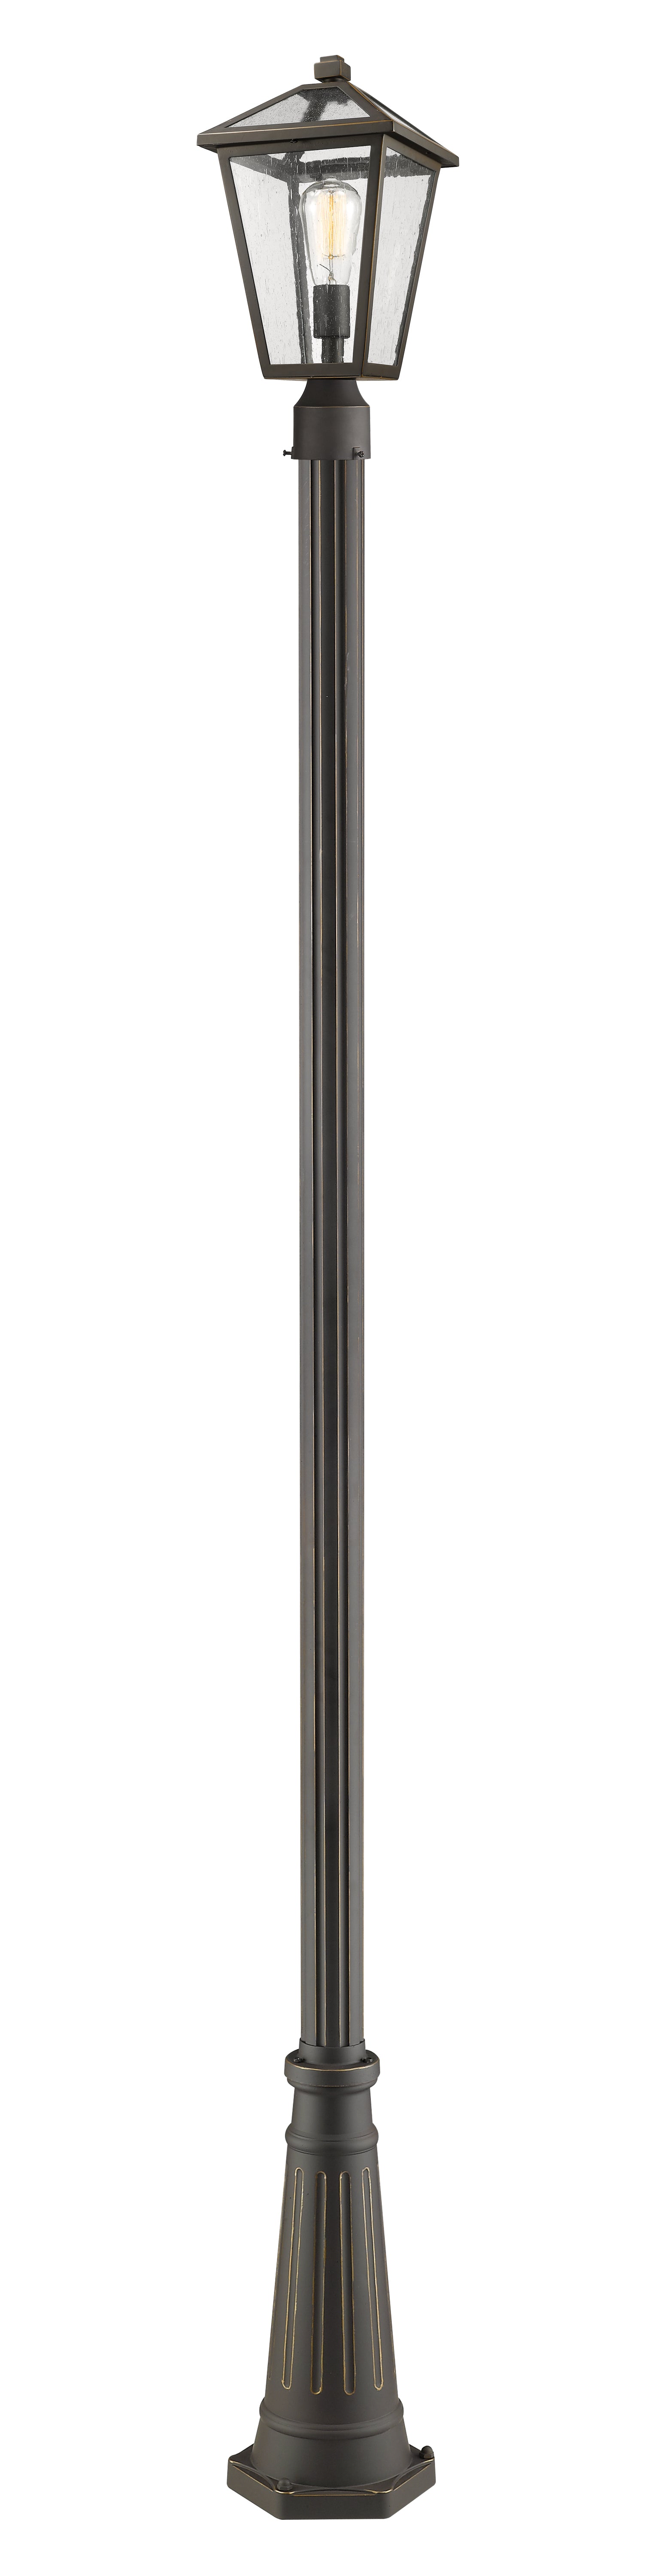 TALBOT Luminaire sur poteau Bronze - 579PHMR-519P-ORB | Z-LITE